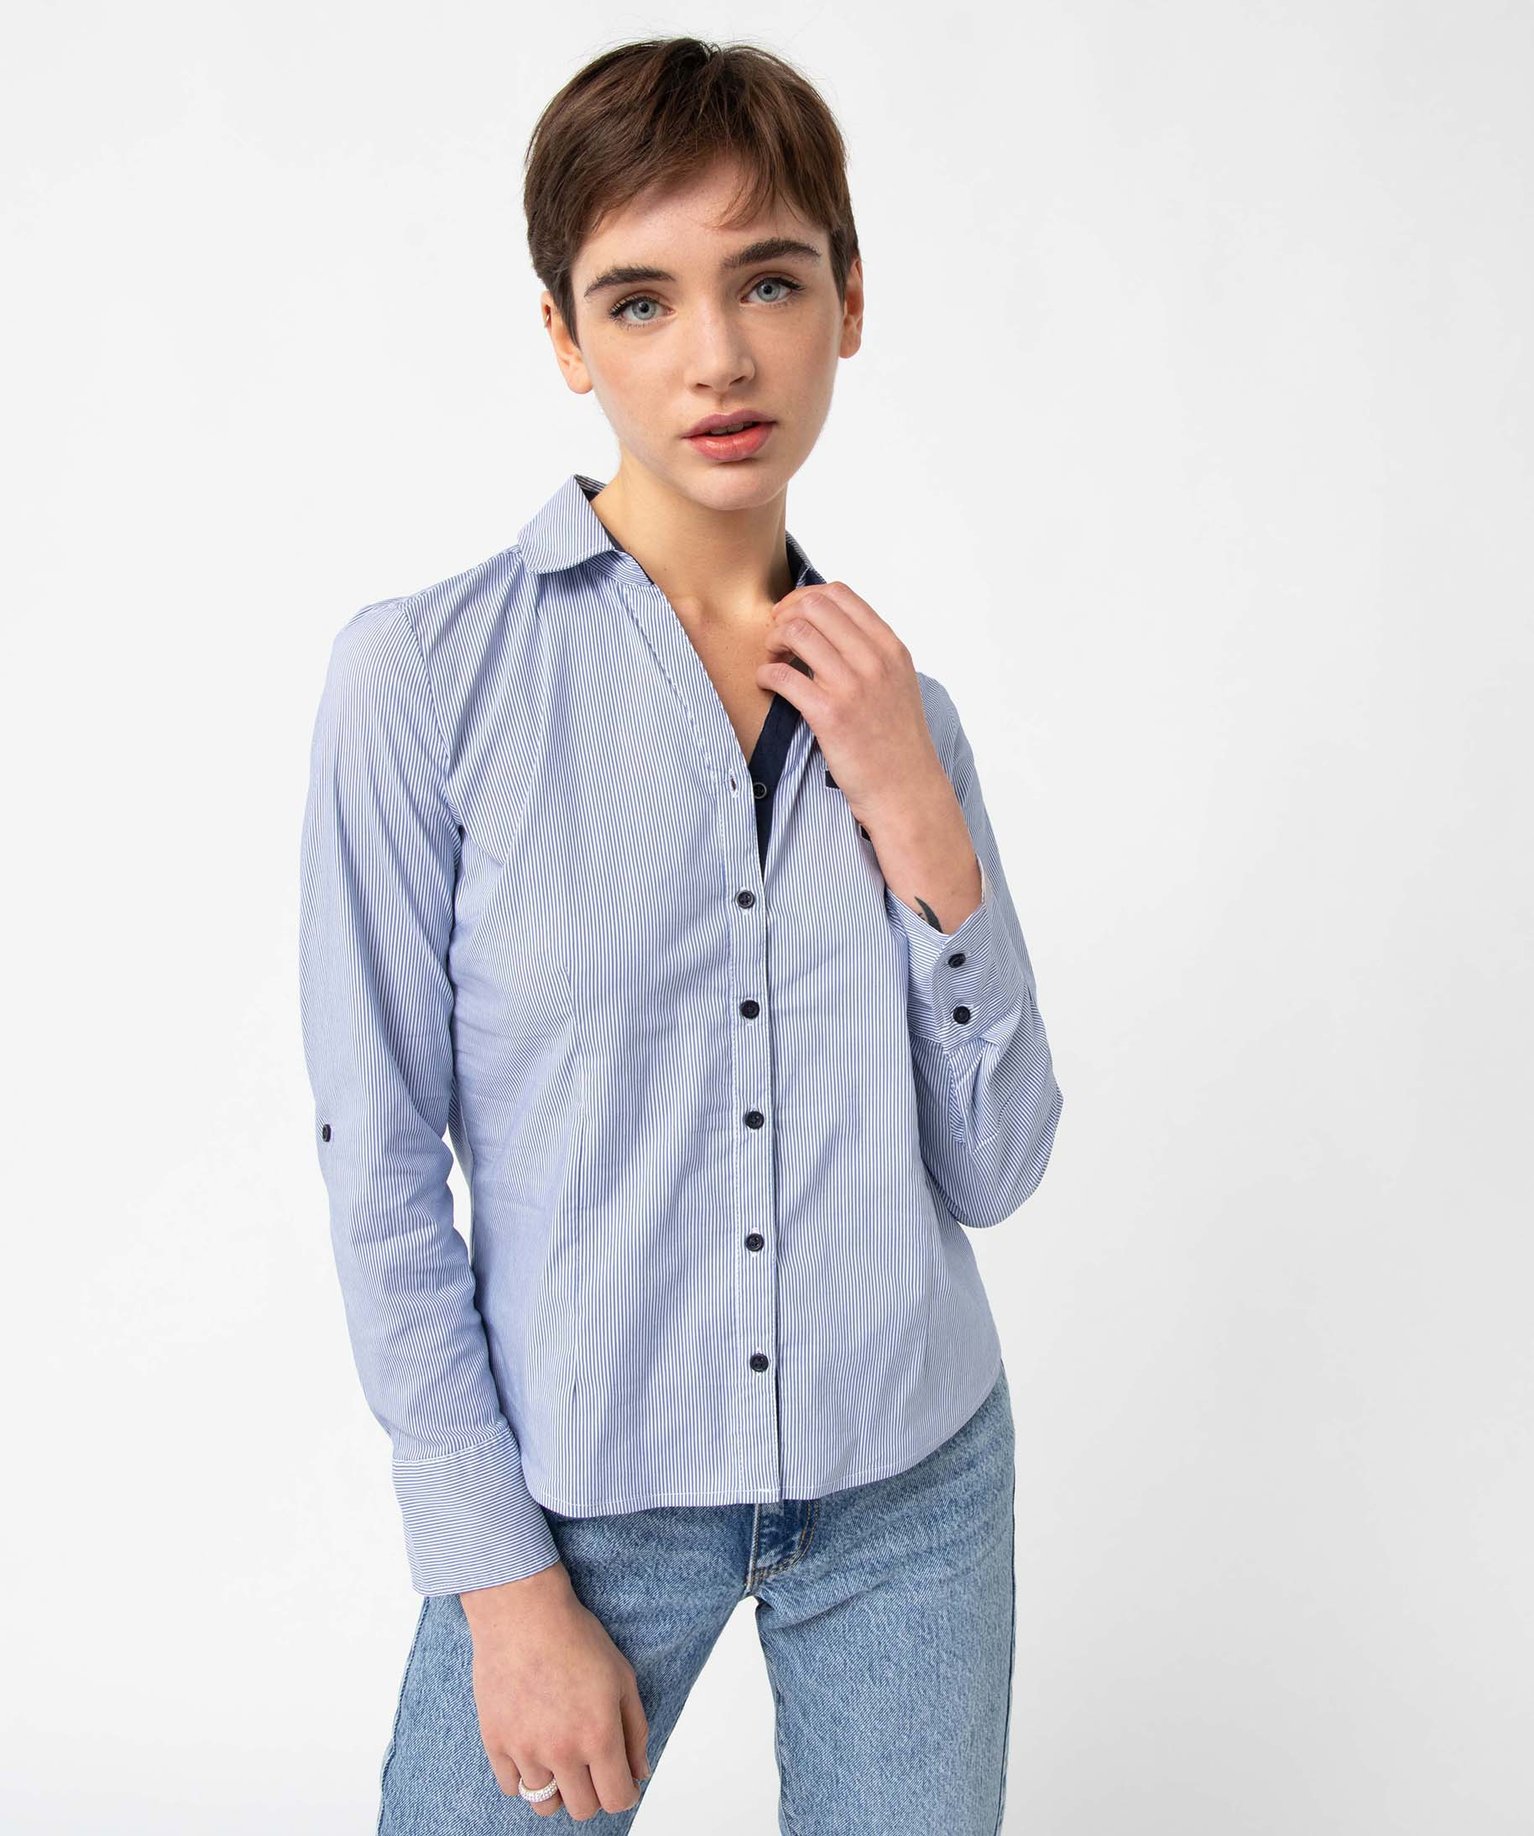 chemise femme rayee coupe ajustee en coton stretch bleu chemisiers